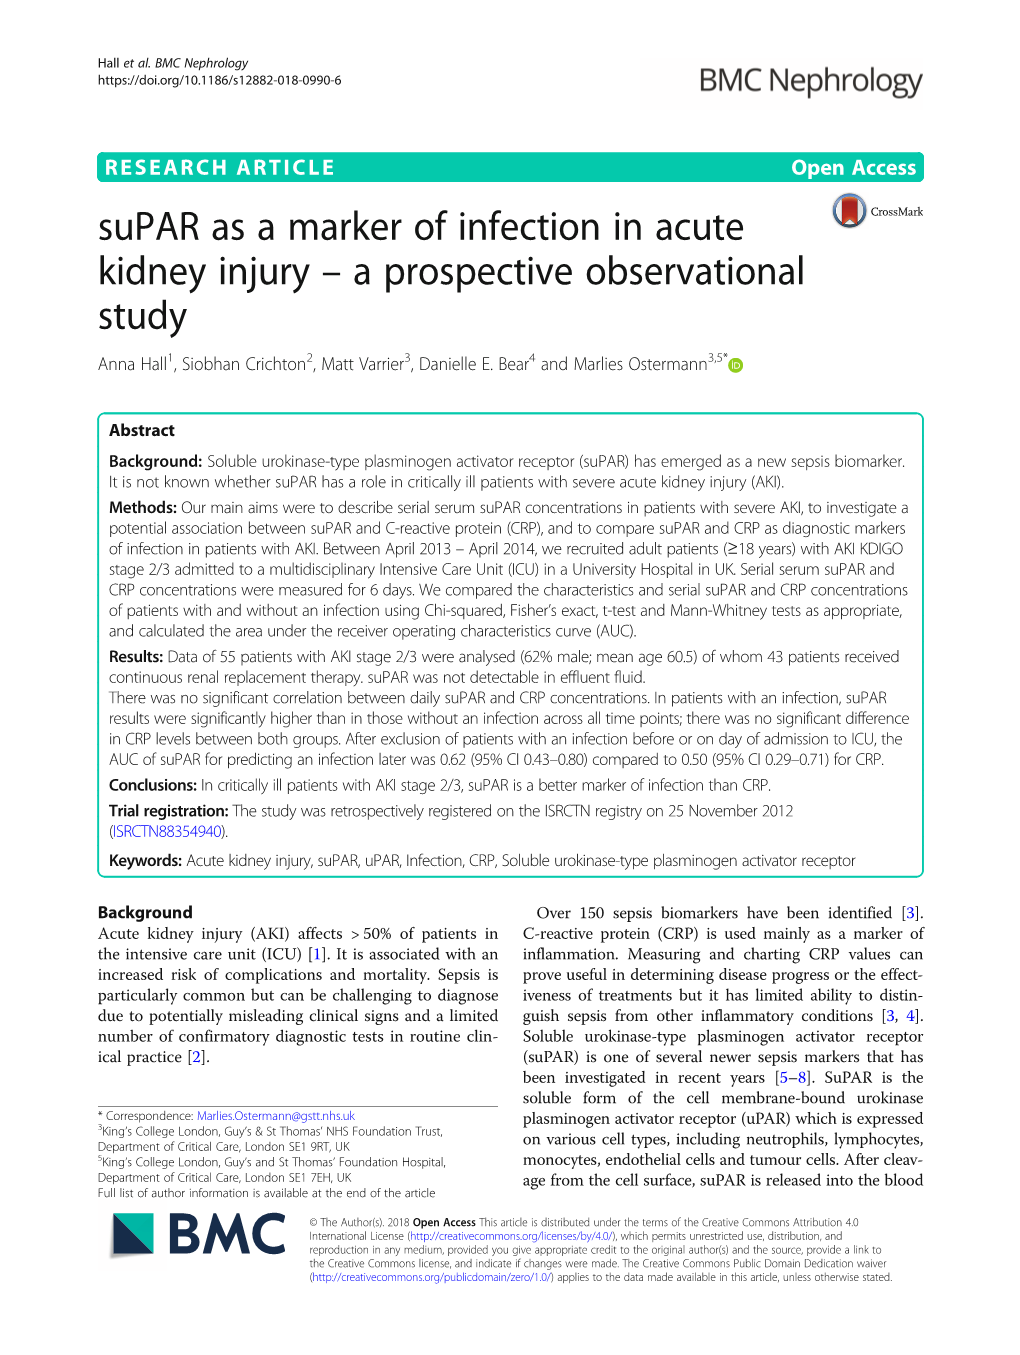 Supar As a Marker of Infection in Acute Kidney Injury – a Prospective Observational Study Anna Hall1, Siobhan Crichton2, Matt Varrier3, Danielle E